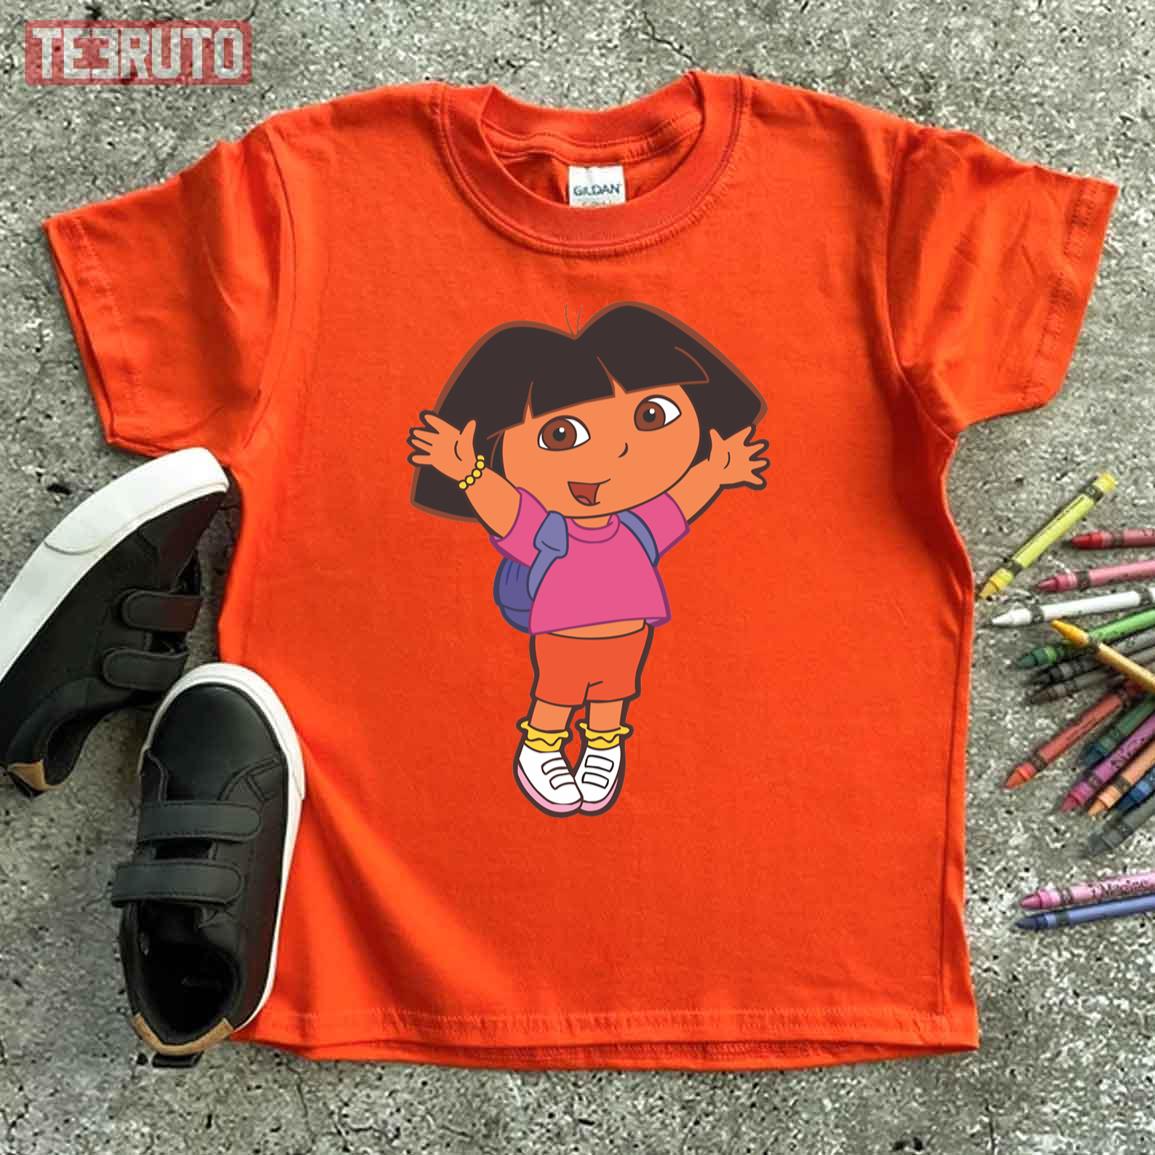 Failed 4 Short Life Dora The Explorer Unisex T-Shirt